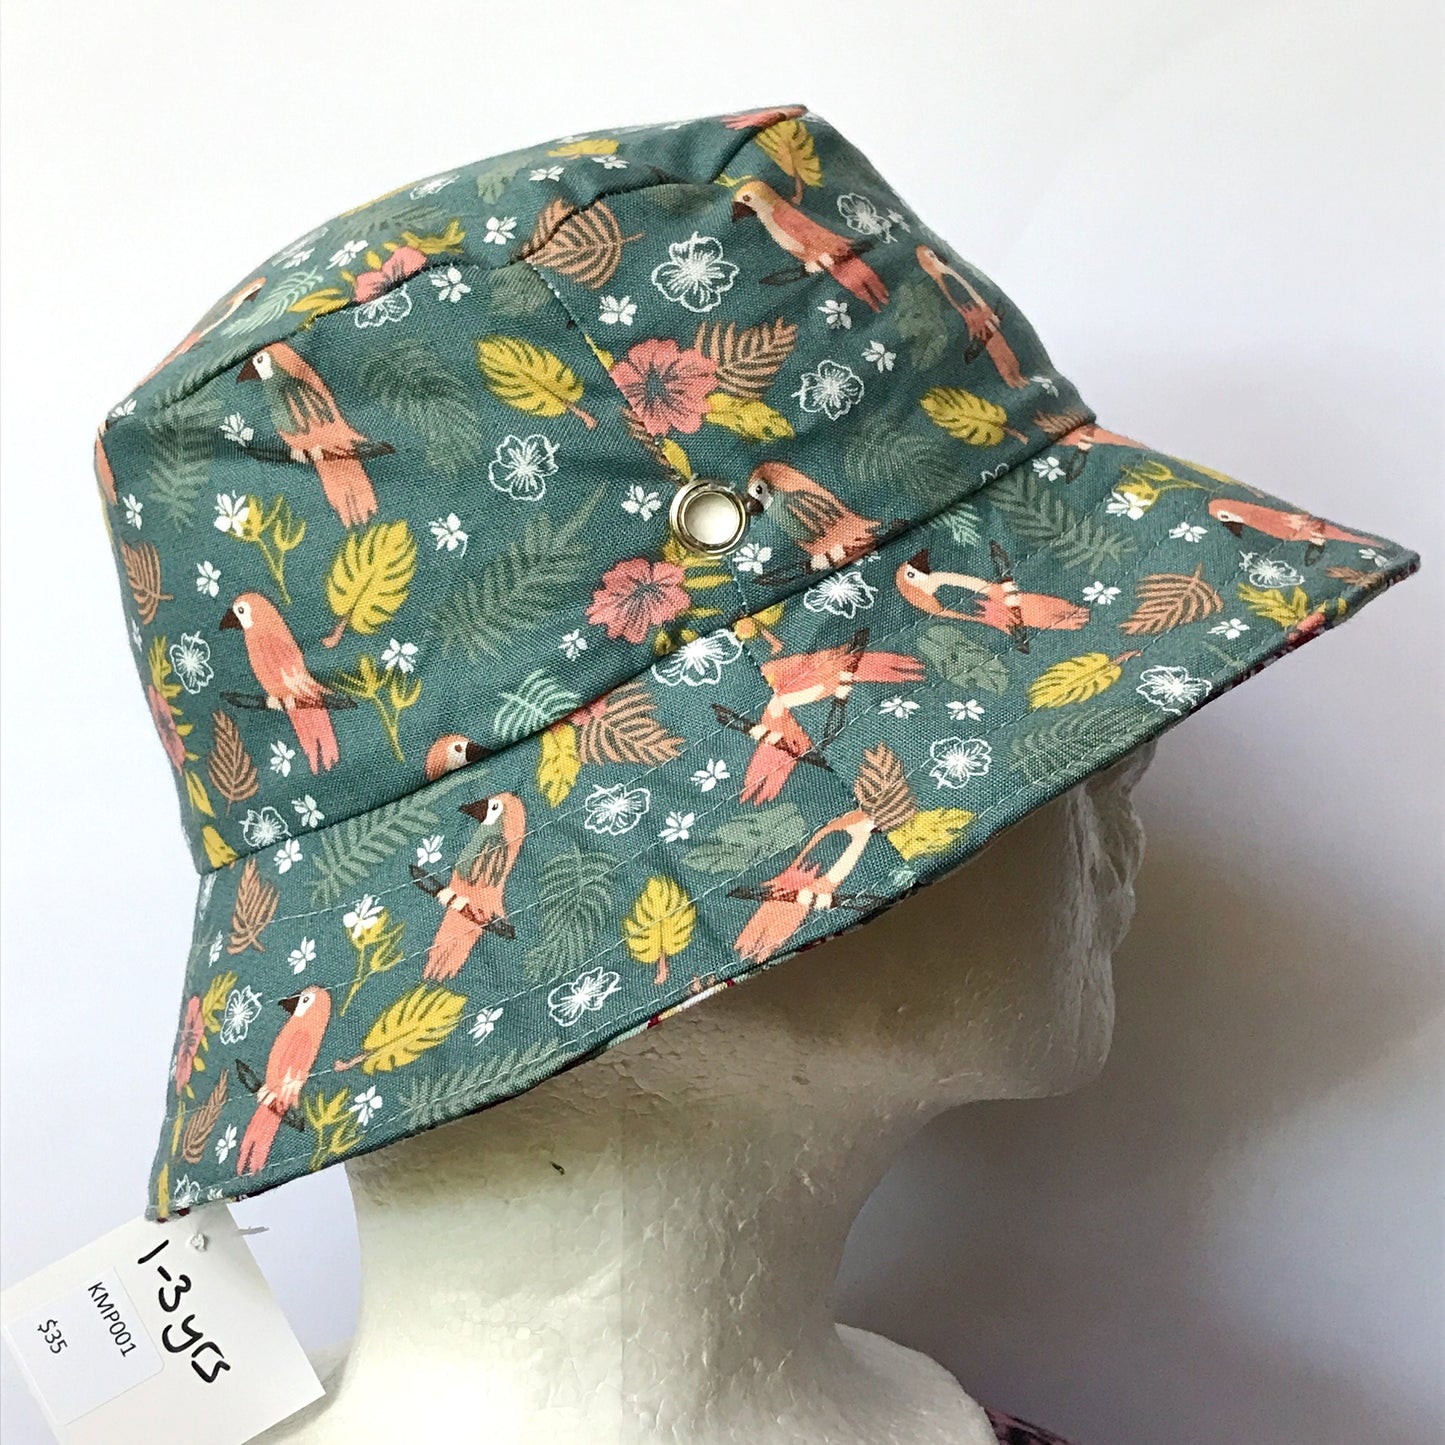 Green Butterfly Reversible Bucket Hat - girls sizes 3 mths - 6 yrs